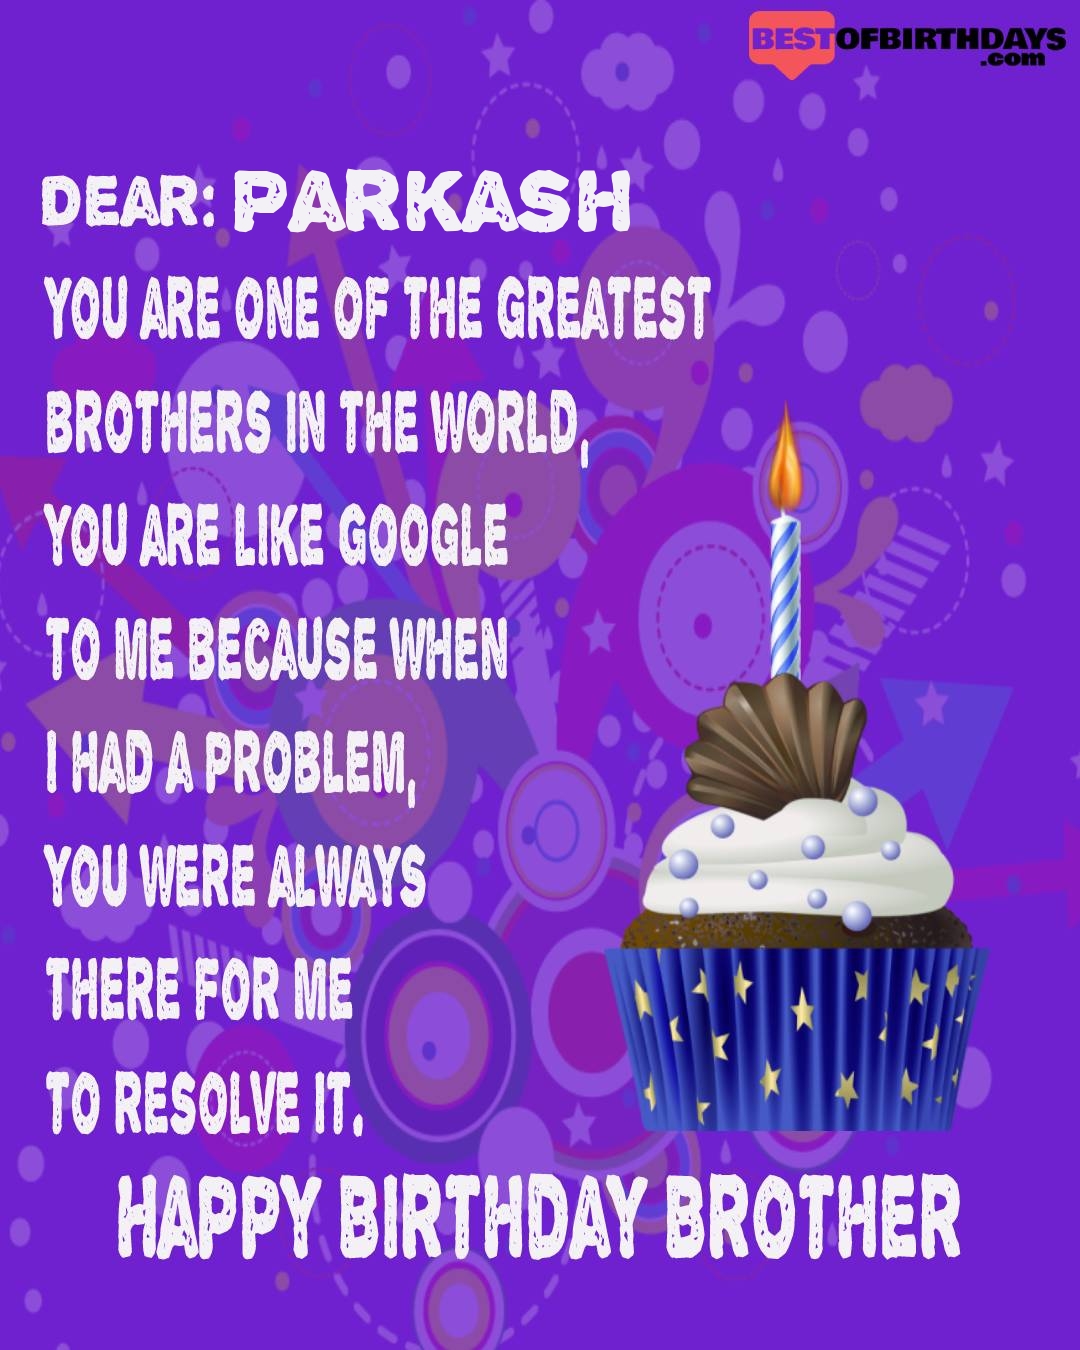 Happy birthday parkash bhai brother bro